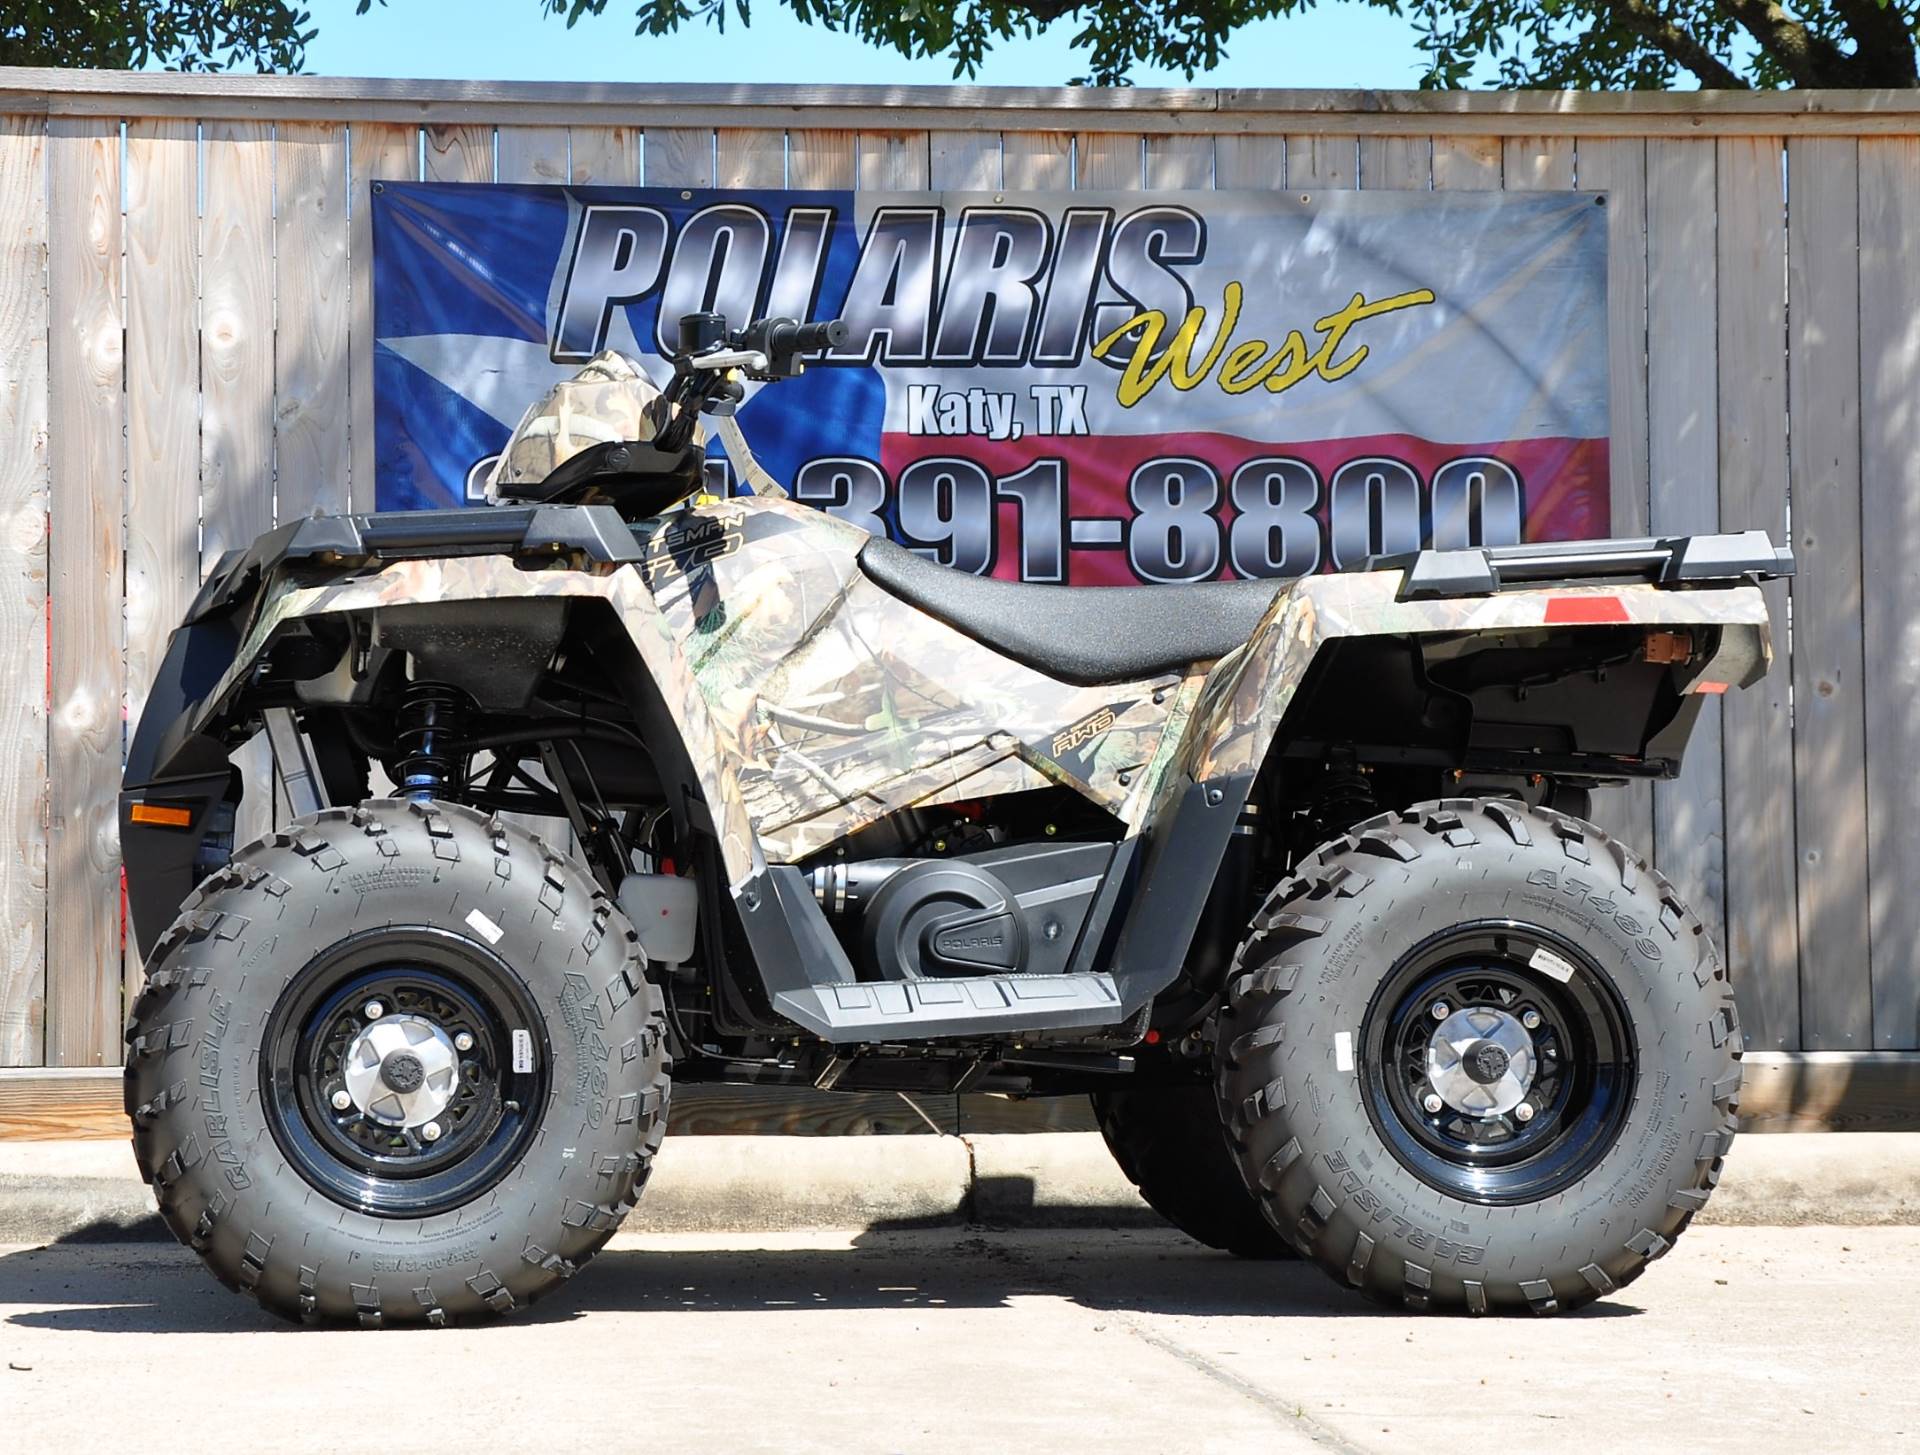 New 2018 Polaris Sportsman 570 Camo ATVs in Katy, TX | Stock Number ...